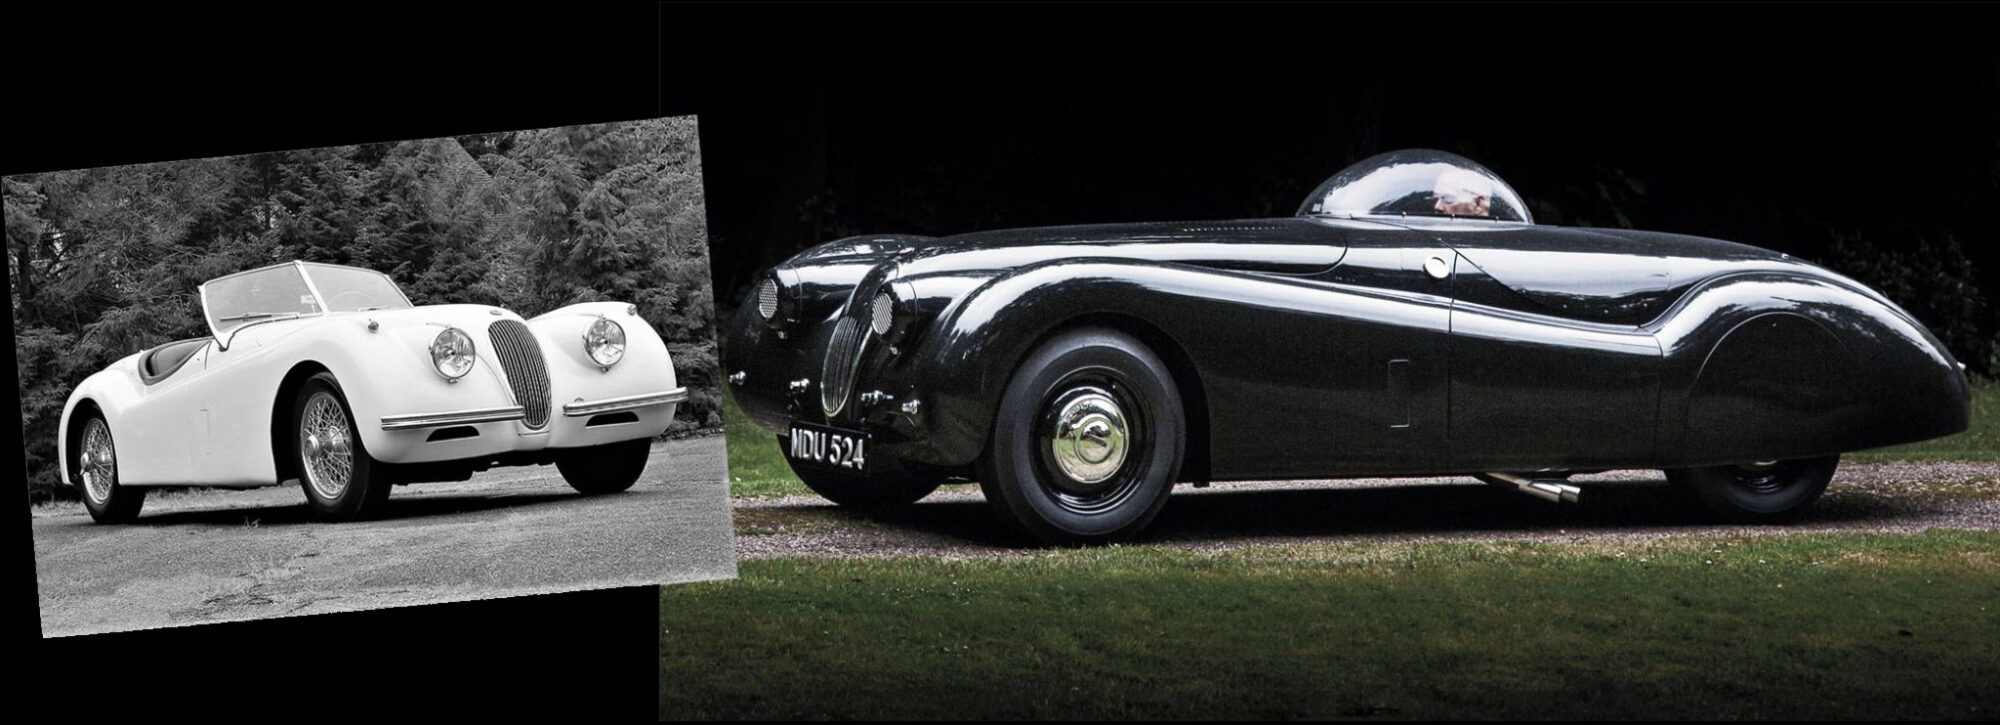 Vintage jaguar colour photo and black and white photo